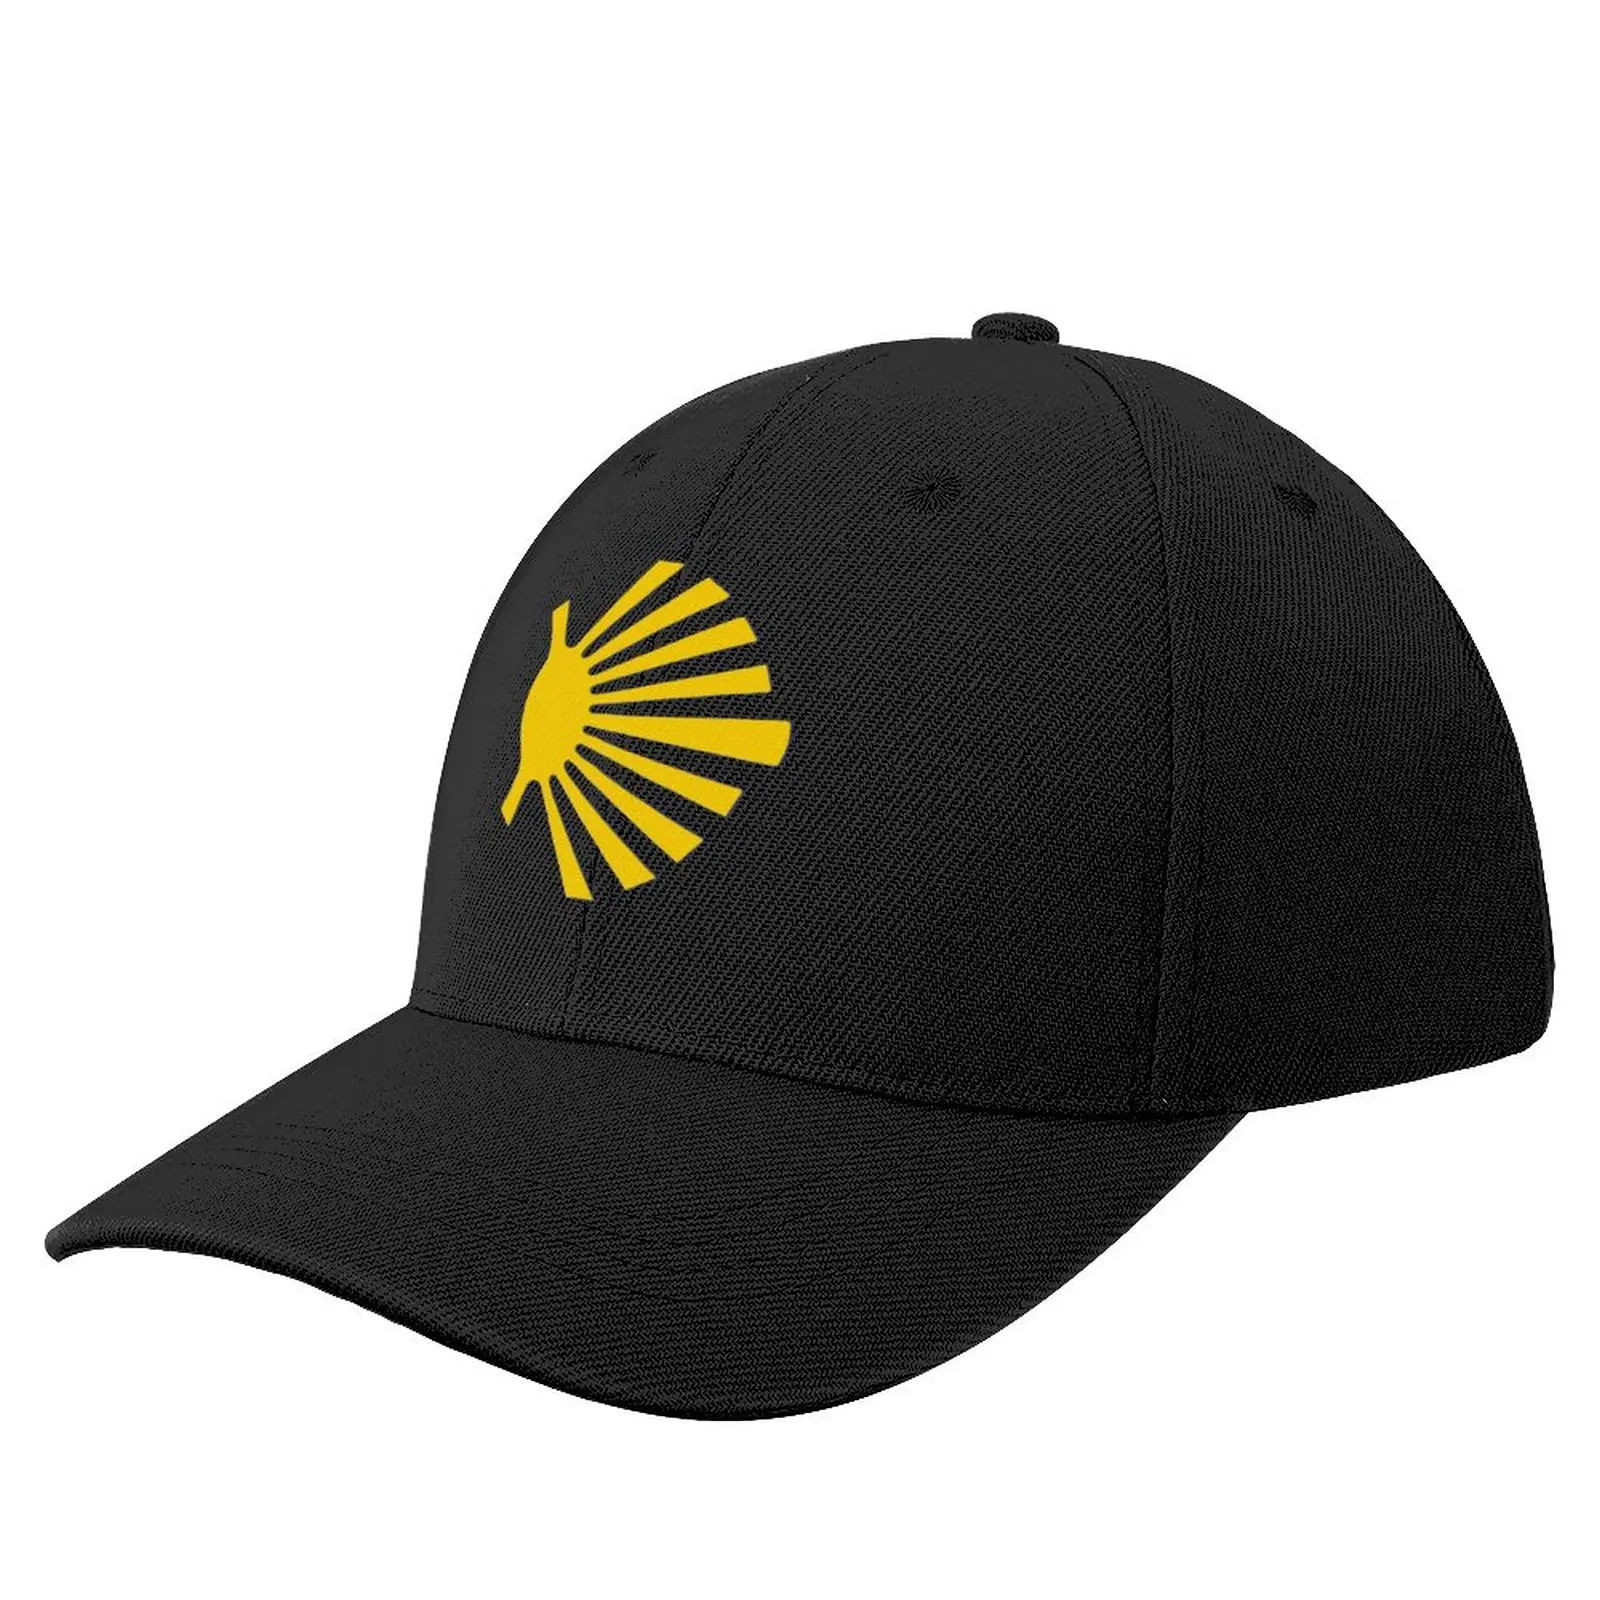 

Camino de Santiago Symbol Large Yellow Scallop Shell Baseball Cap Sunhat New In The Hat Men Hat Women's